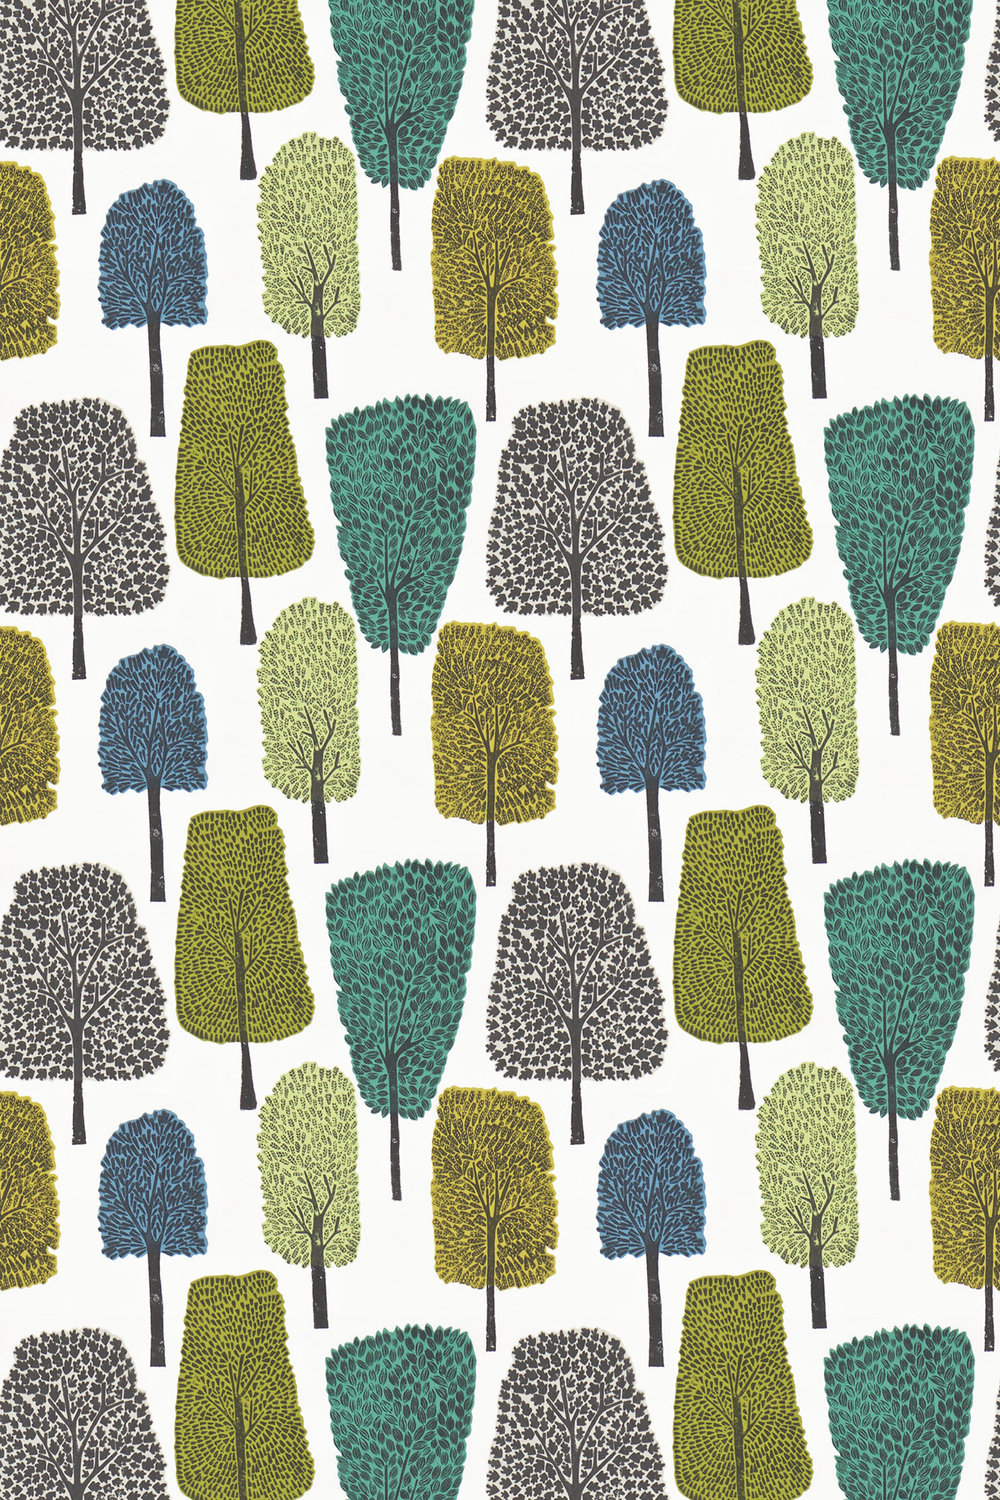 Cedar Fabric - Slate, Apple and Ivy - by Scion